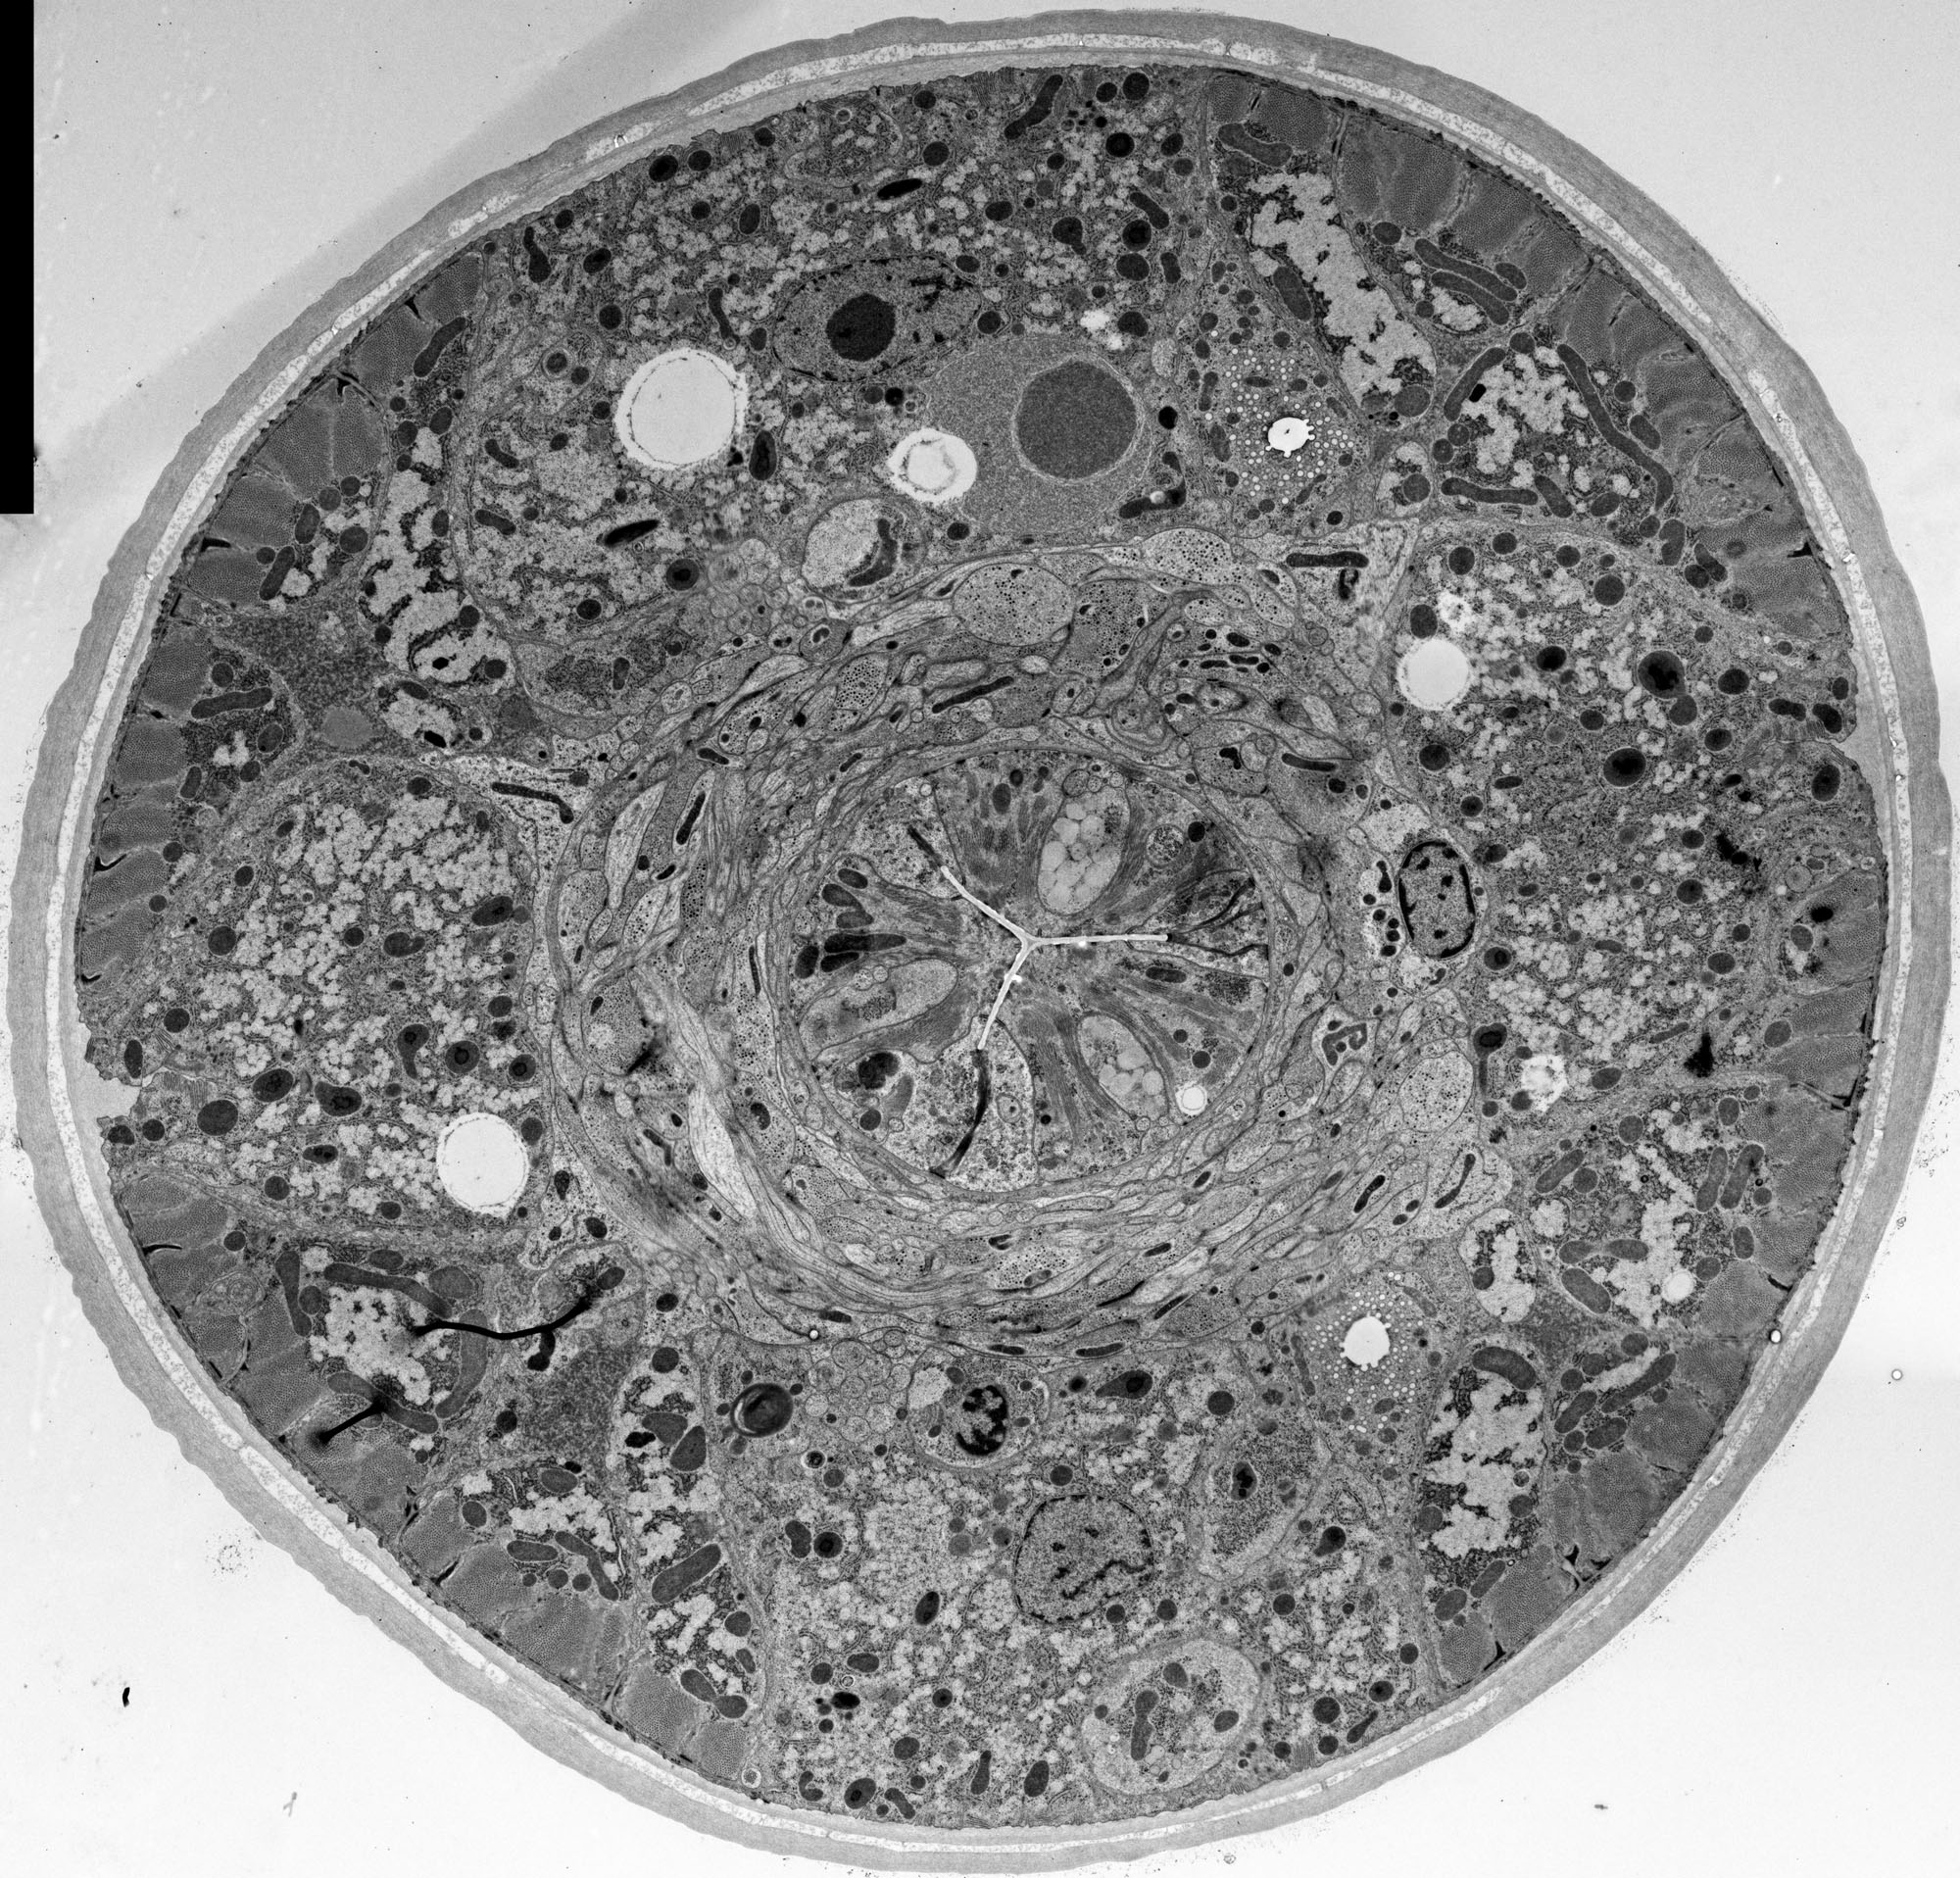 Synapse Electron Micrograph